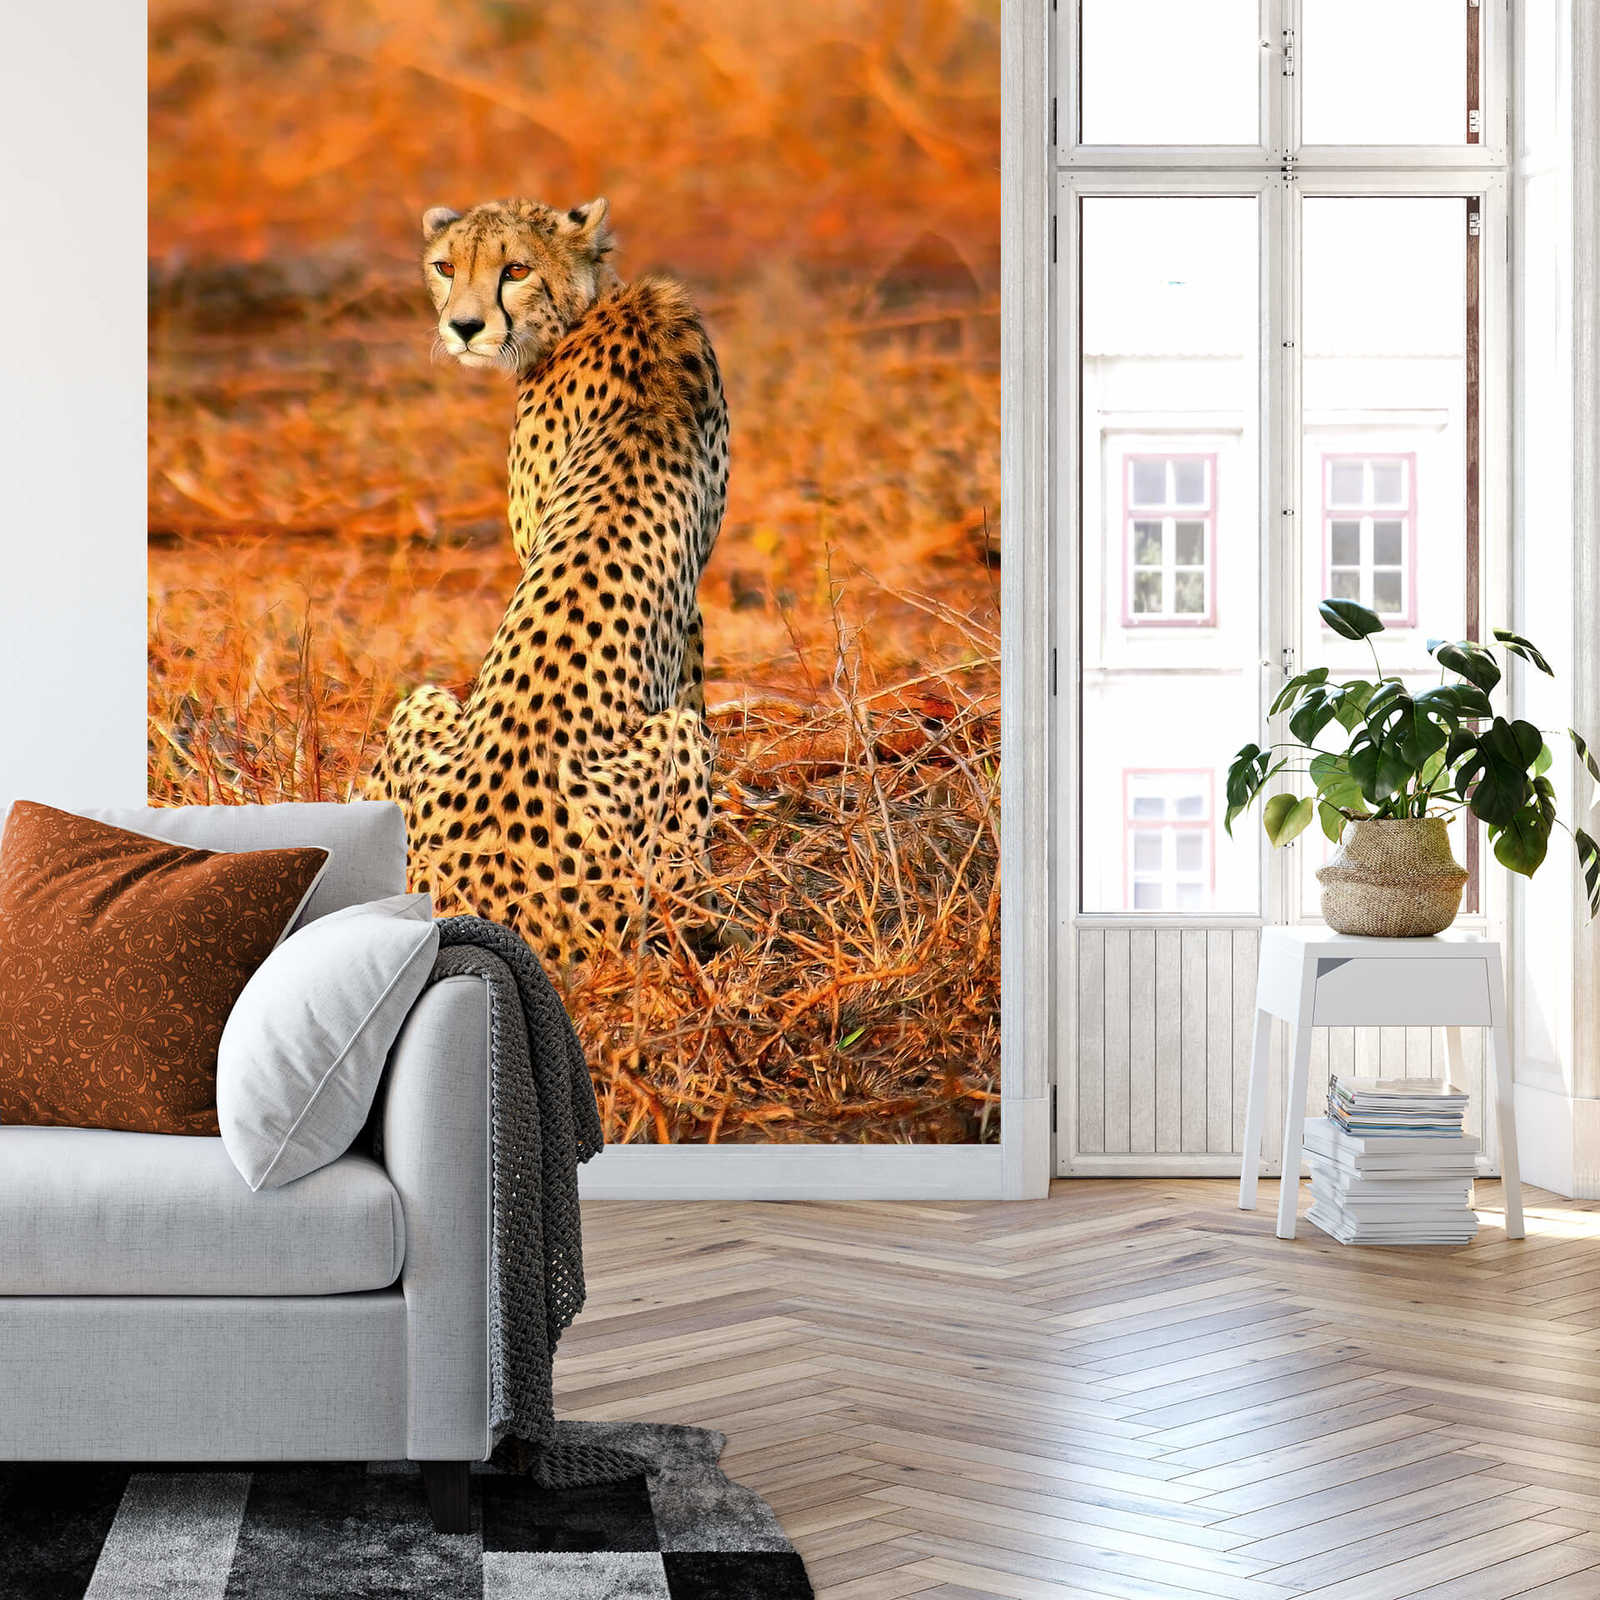             Safari Fototapete Tier Leopard – Gelb, Orange, Schwarz
        